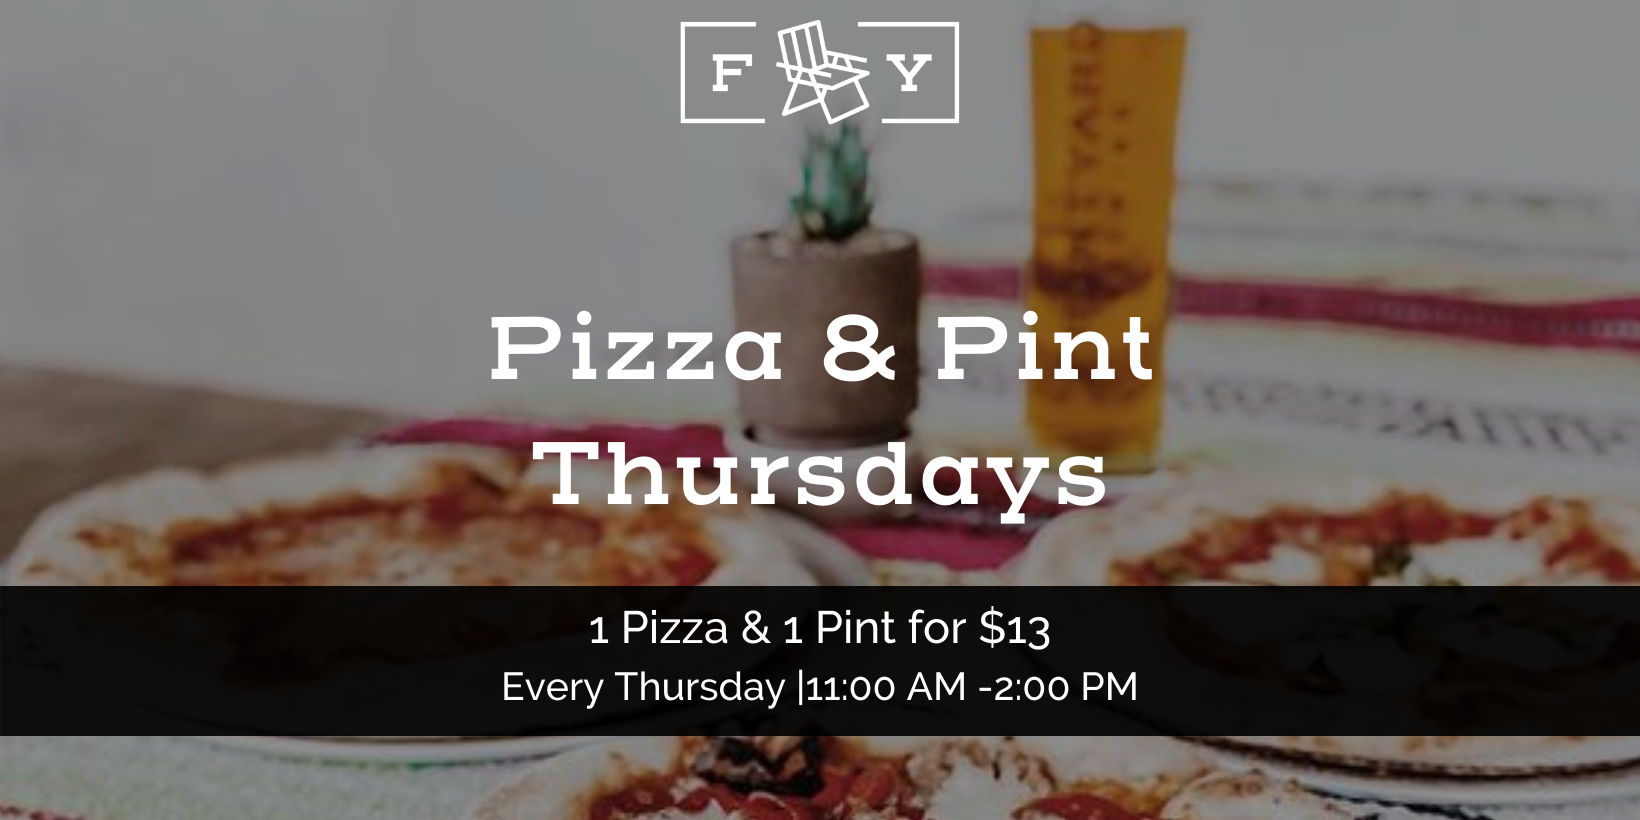 Pizza & Pint Thursdays promotional image